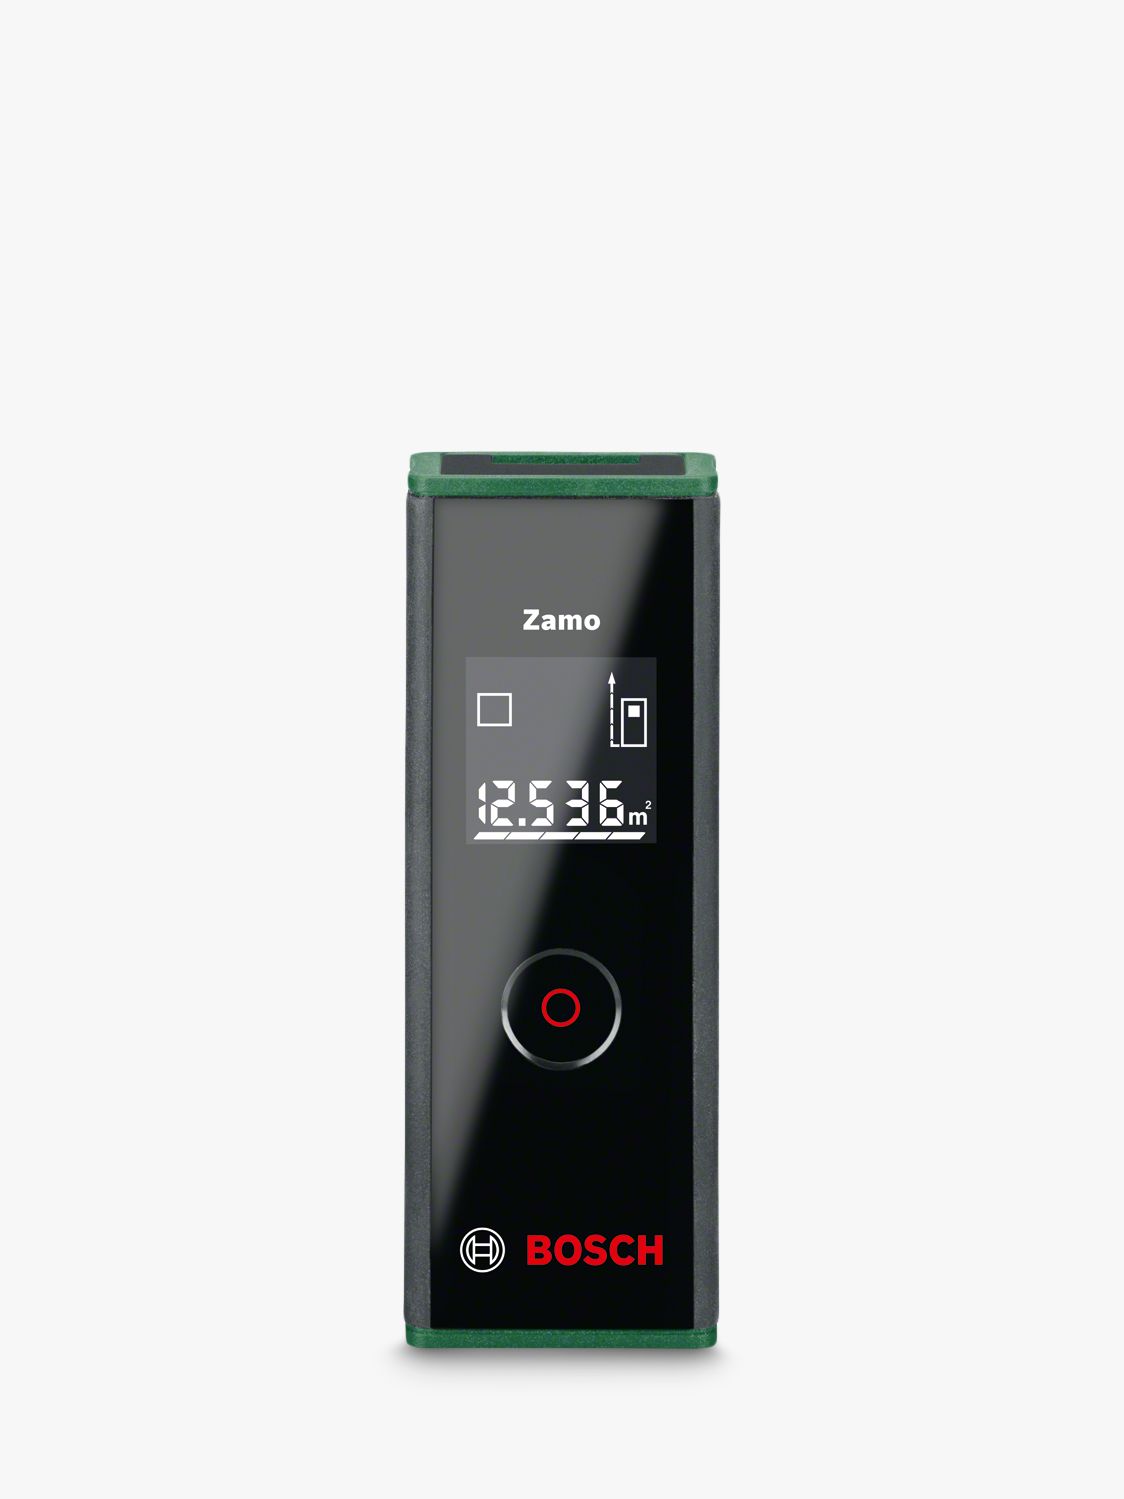 Bosch Zamo Iii Digital Laser Set At John Lewis Partners